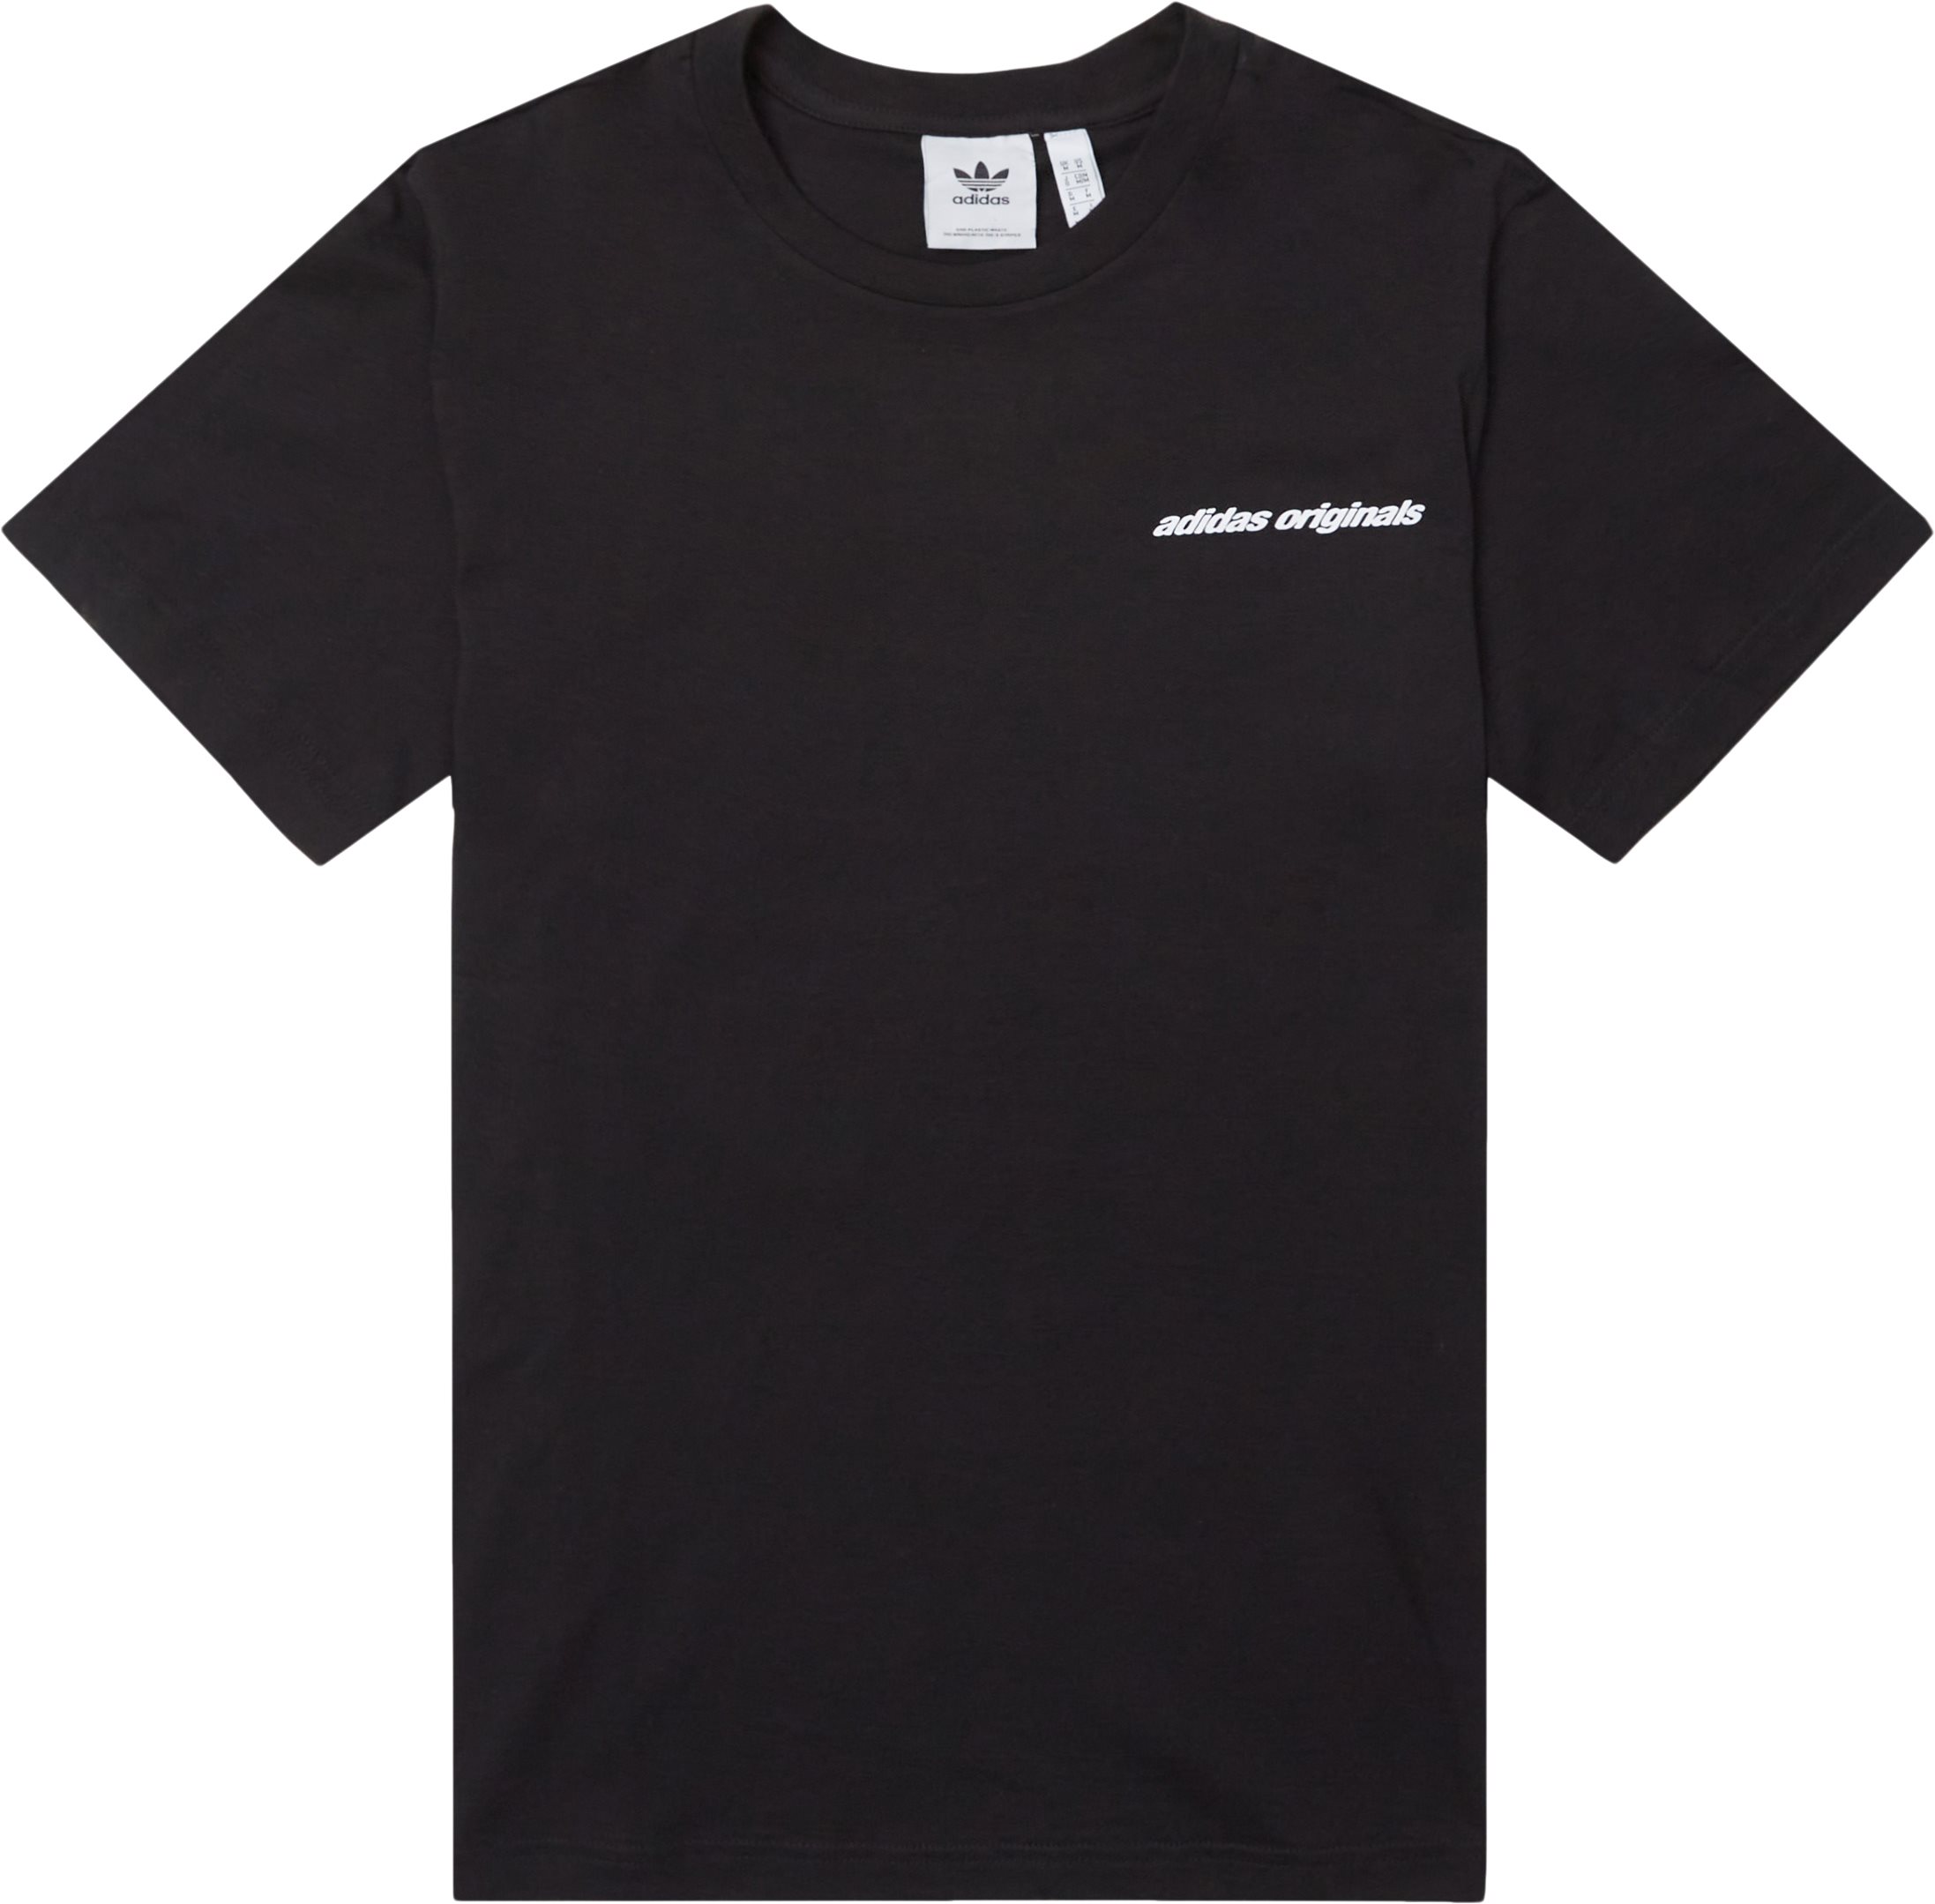 Yung Z Tee - T-shirts - Regular fit - Black